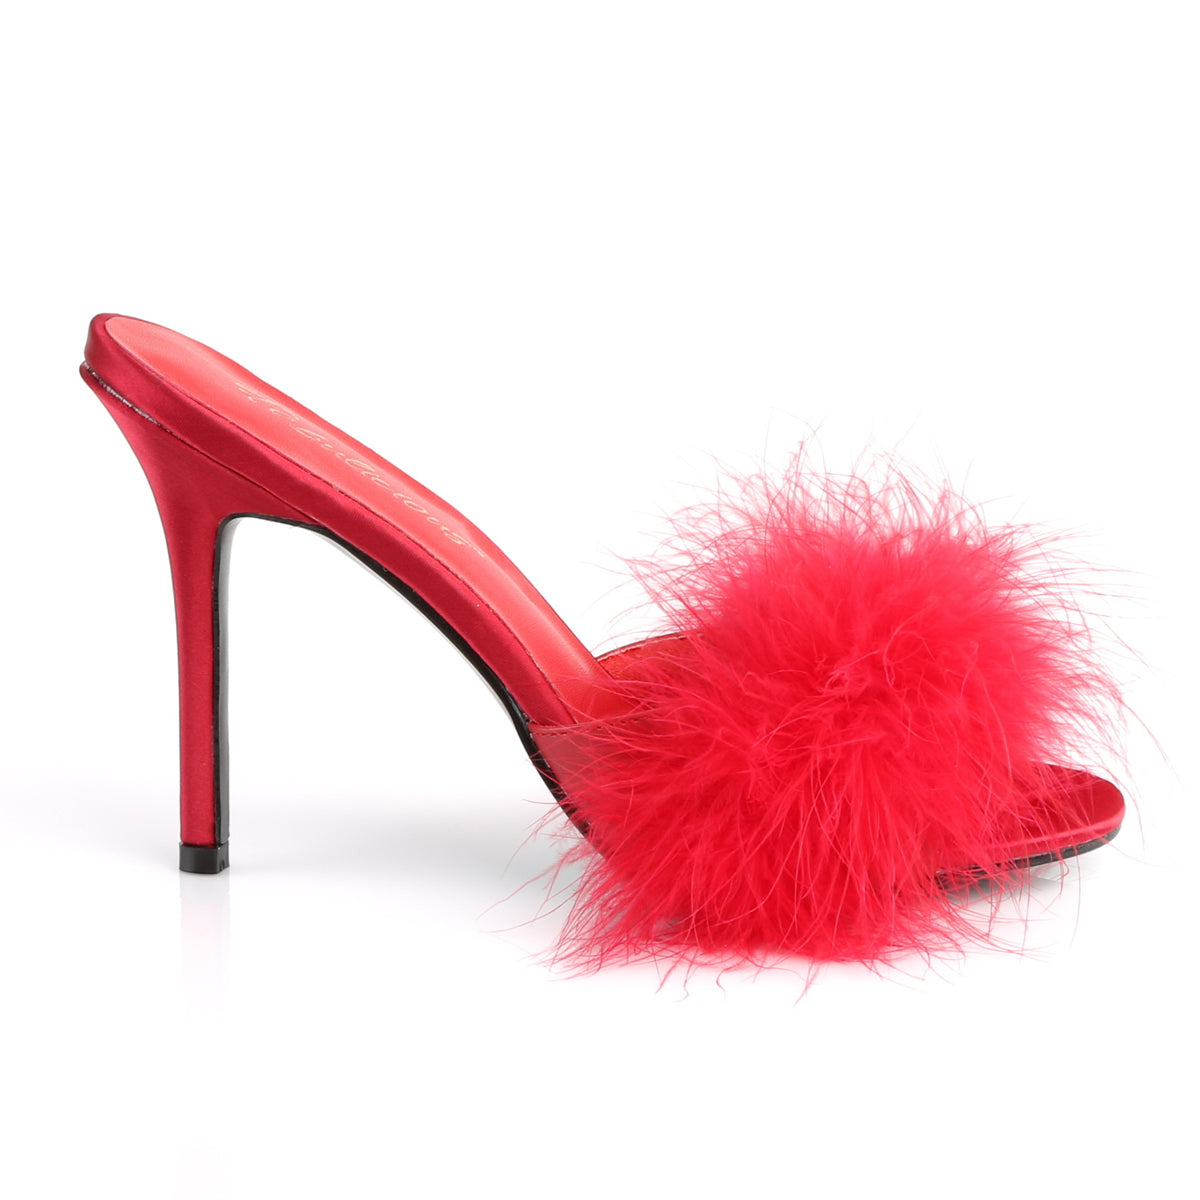 CLASSIQUE-01F Fabulicious 4 Inch Heel Red Bedroom Sexy Shoes-Fabulicious- Sexy Shoes Fetish Heels